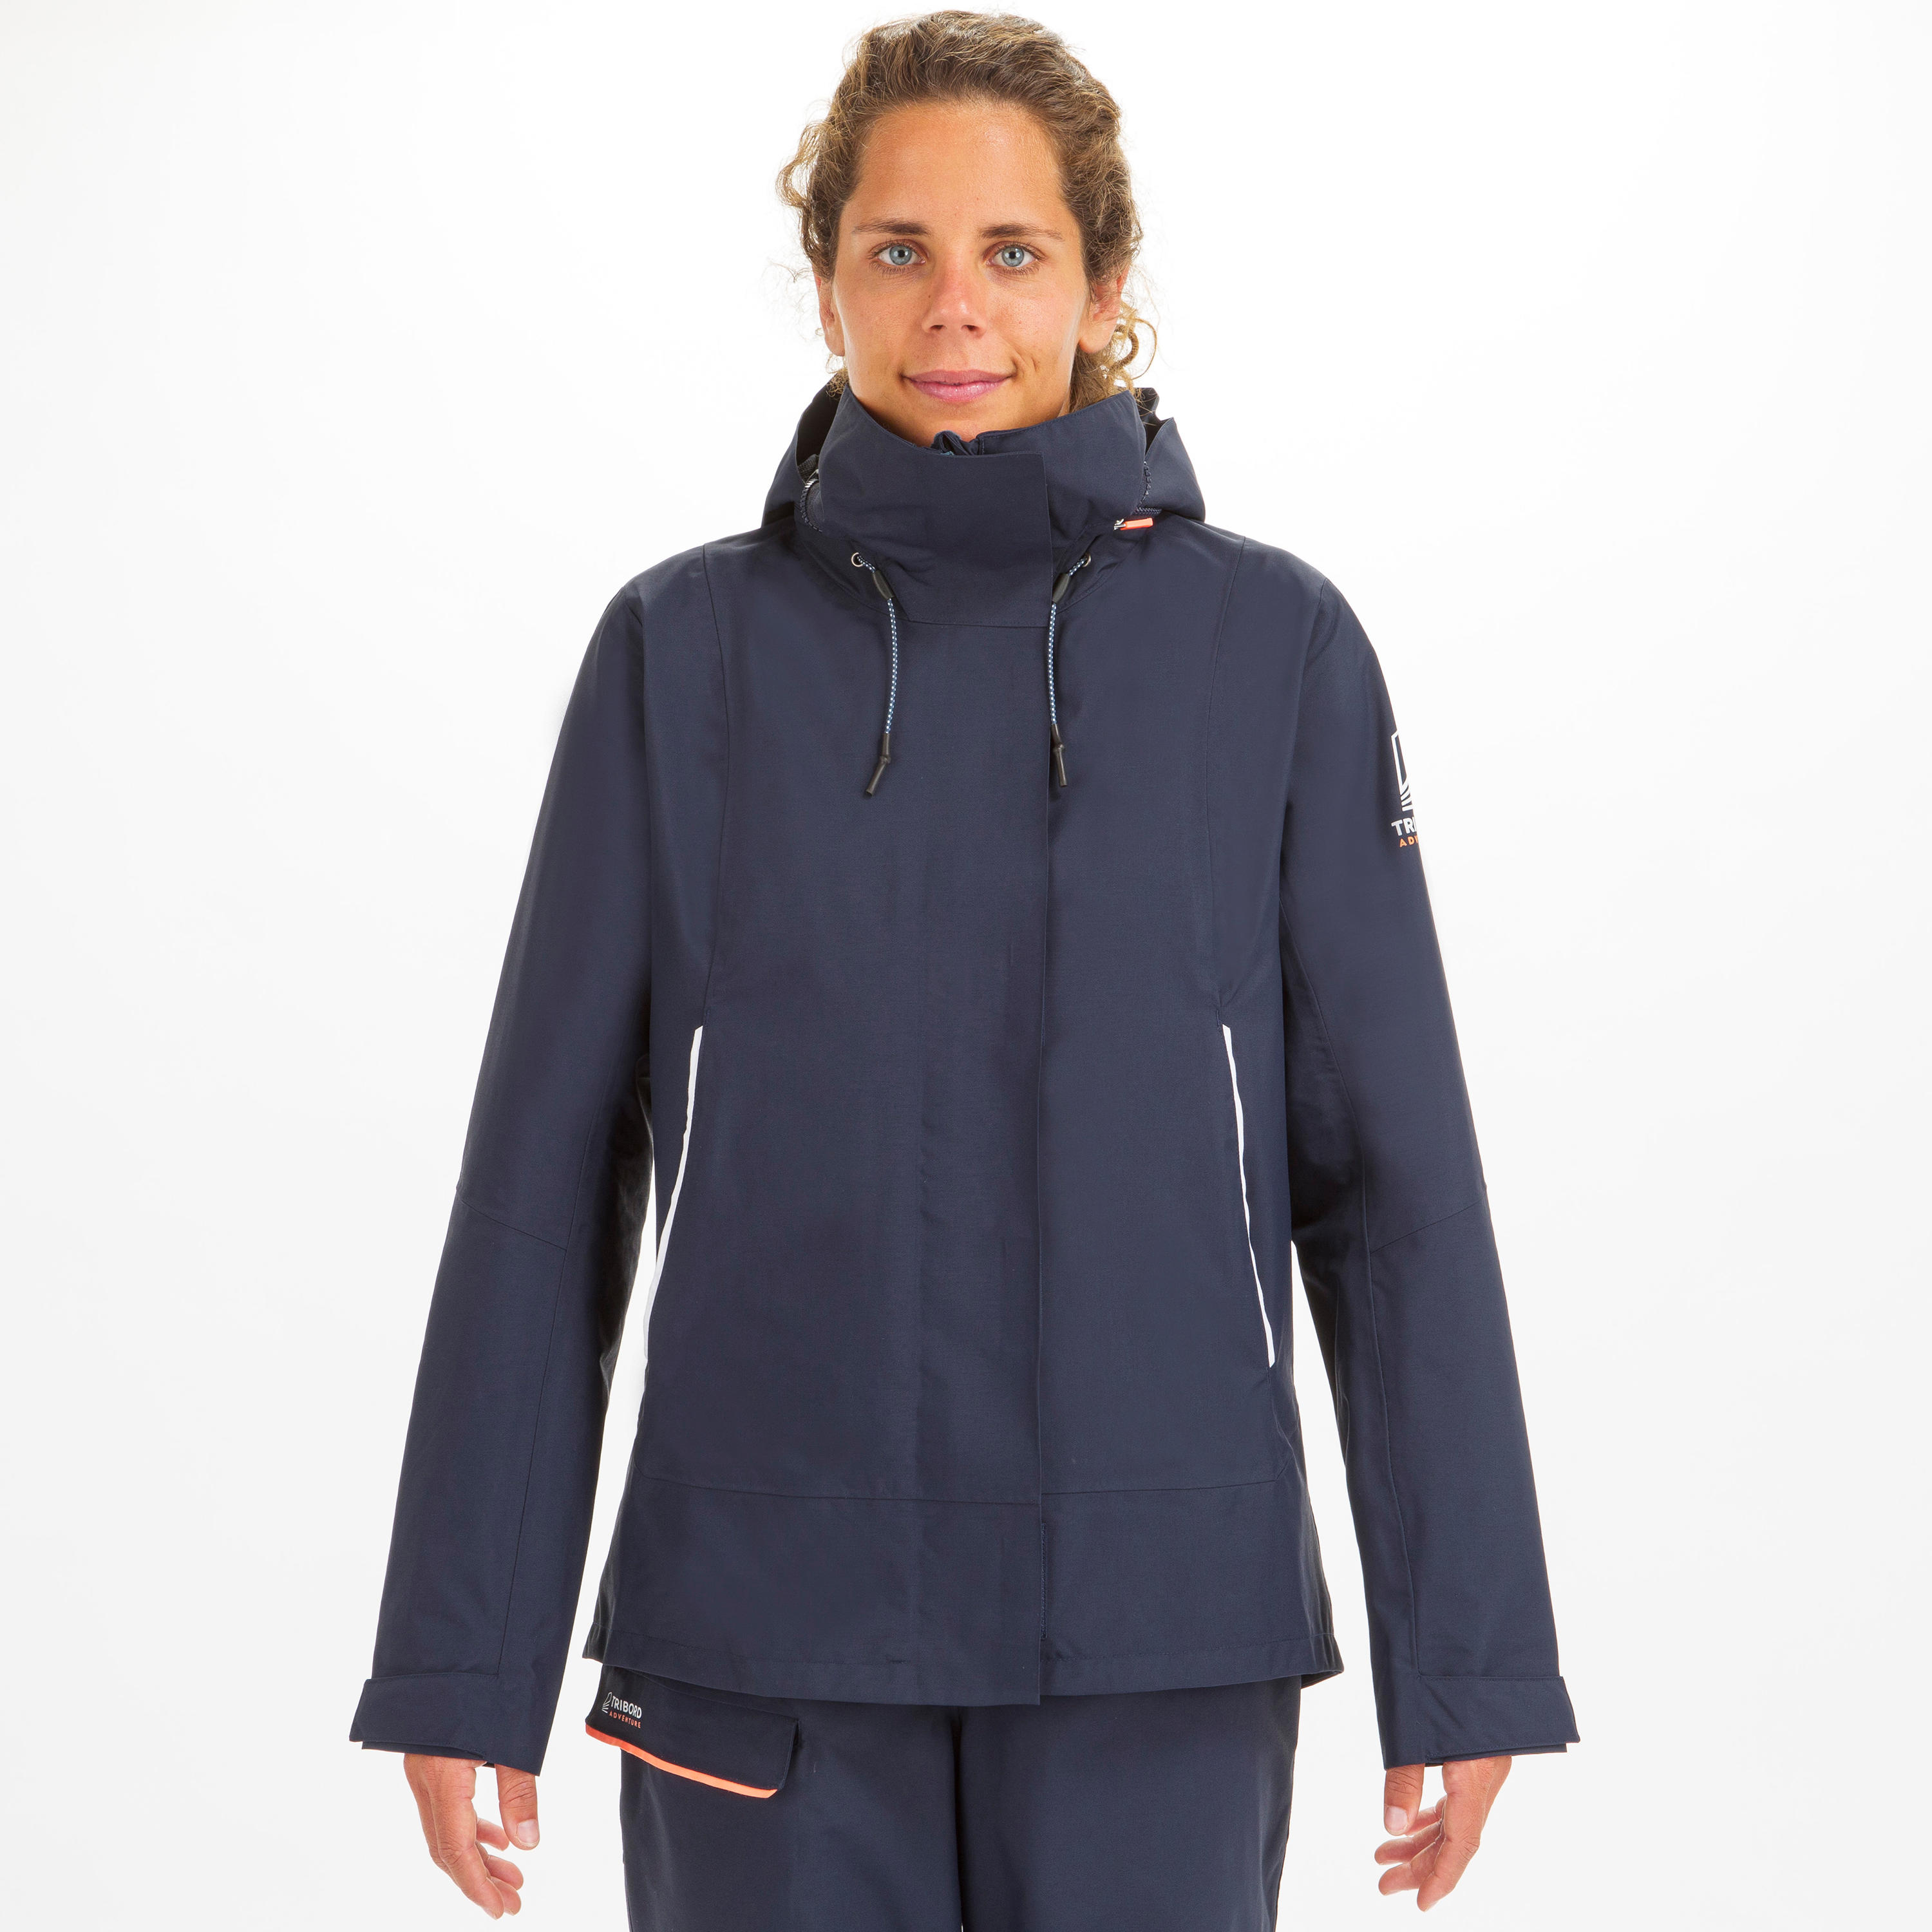 TRIBORD Women's Waterproof Wind-proof Rain Jacket SAILING 300 navy